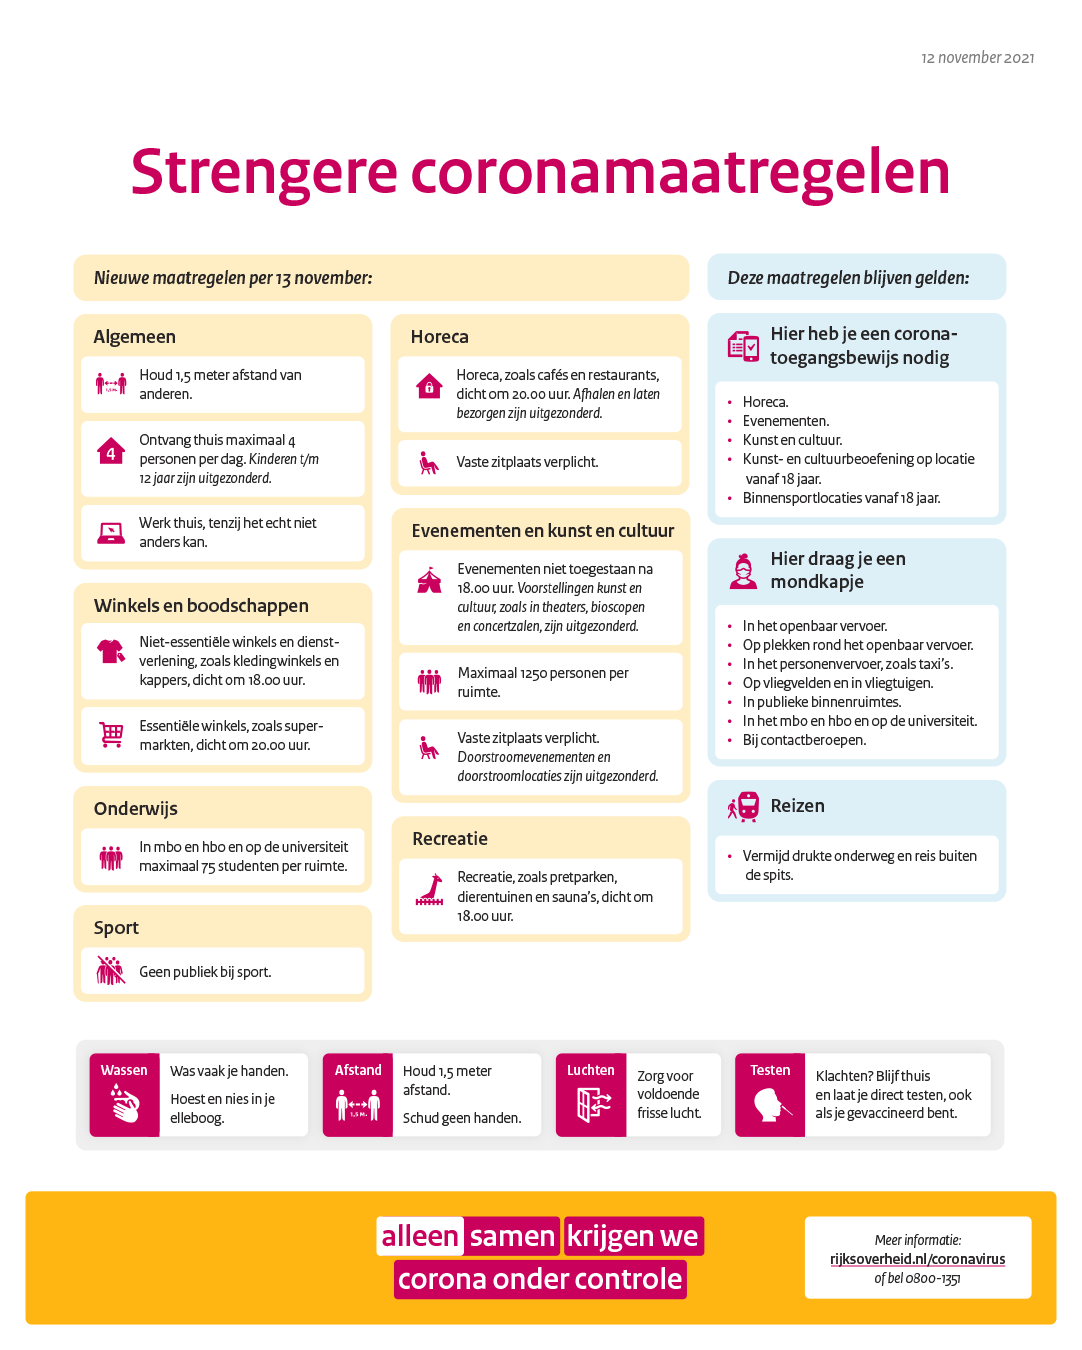 Strengere_Corona-Maatregelen_Nederland_13_November_2021